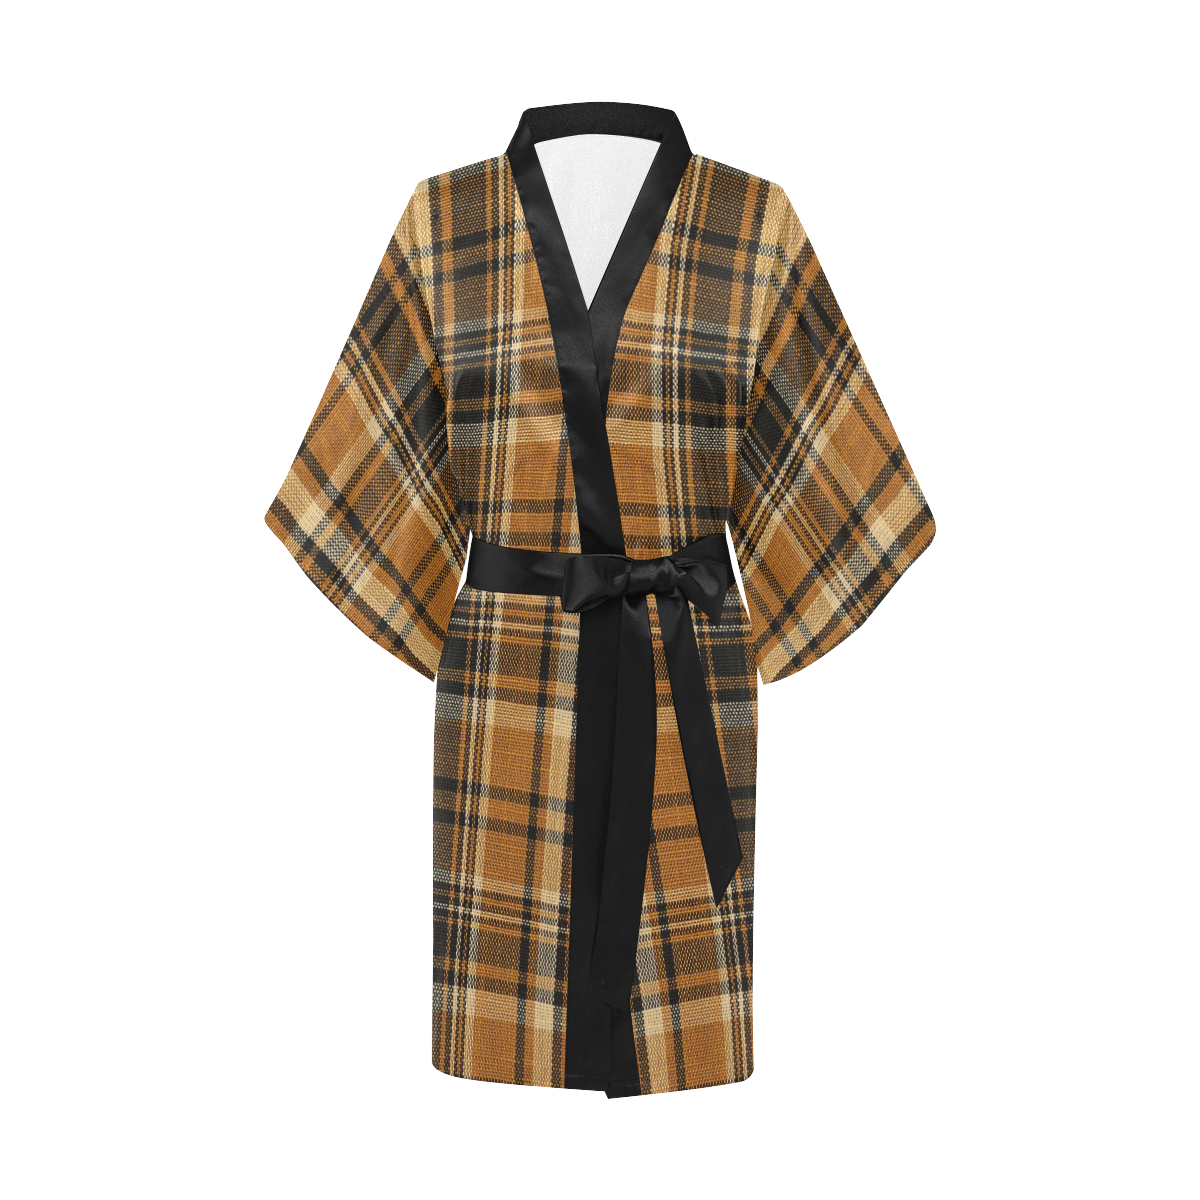 TARTAN DESIGN Kimono Robe